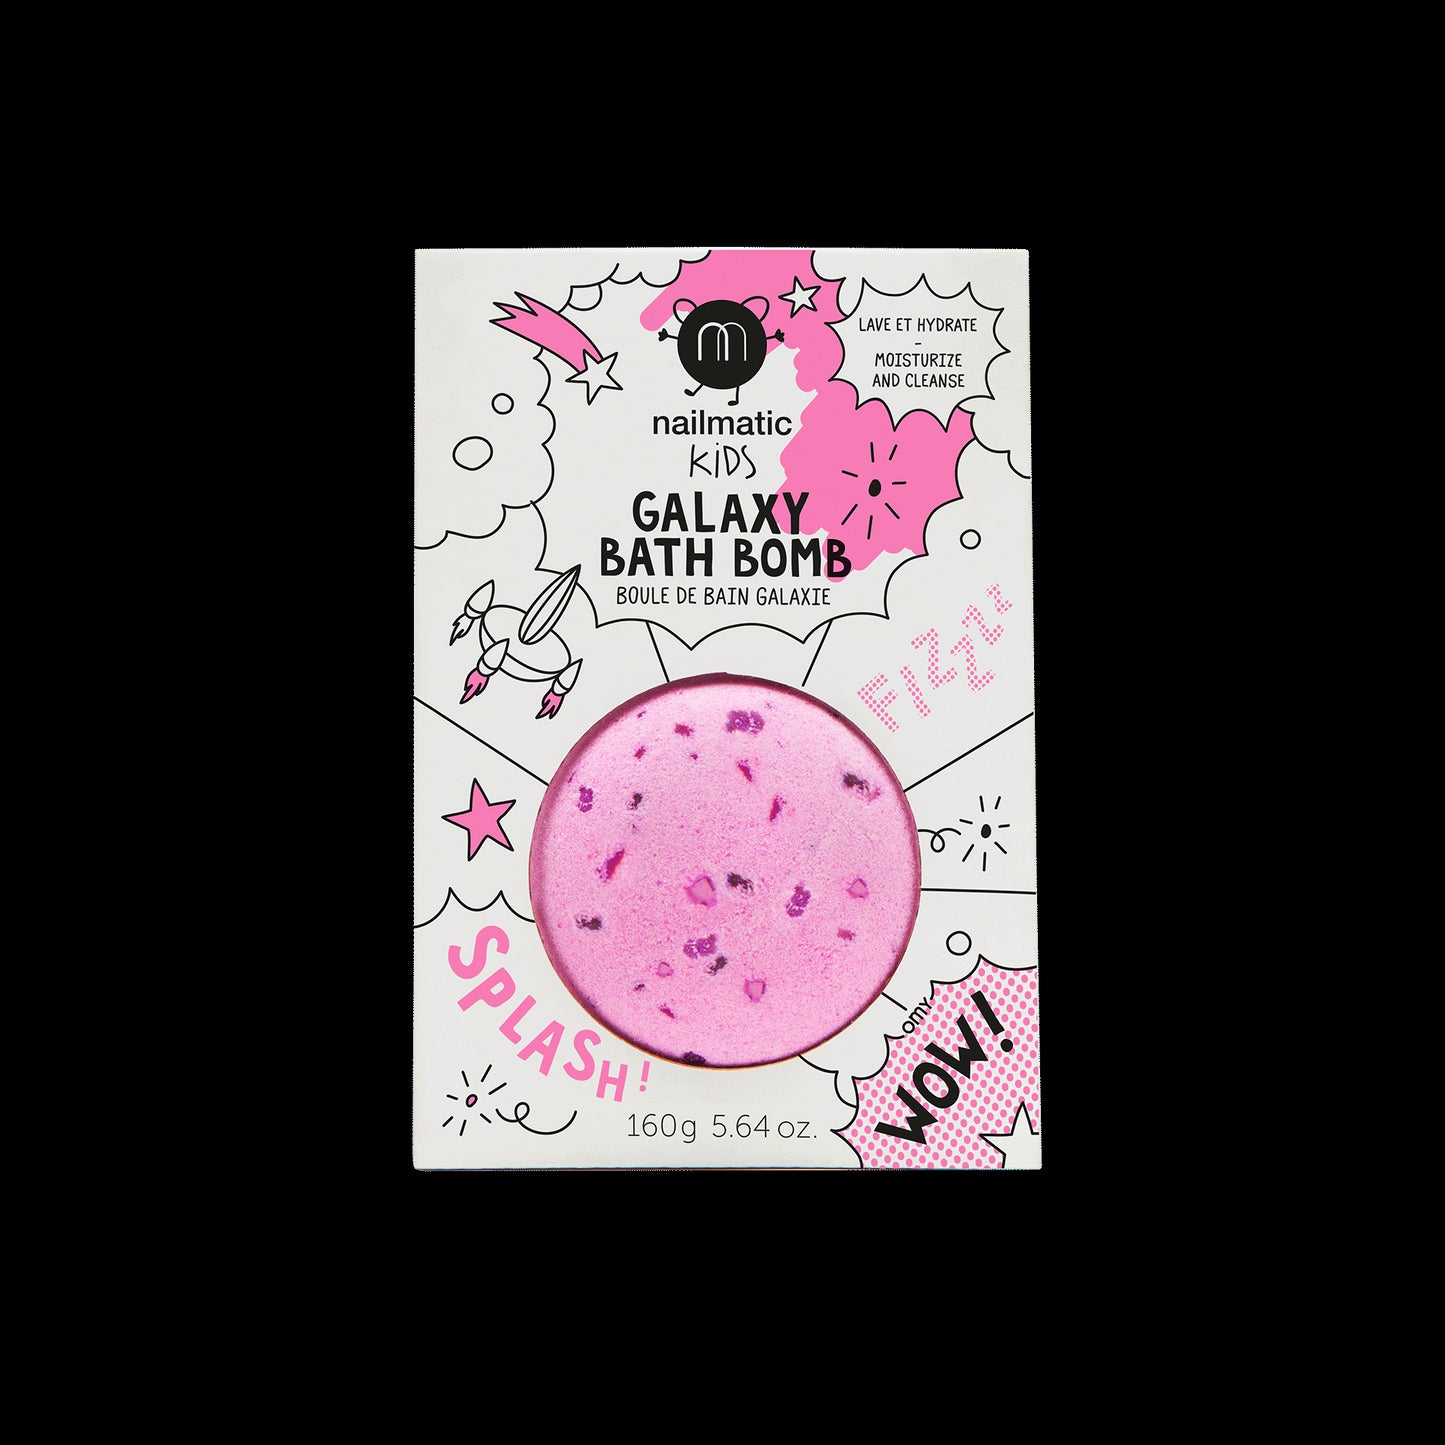 pink kids bath bomb cosmic galaxy bath bomb with packaging nailmatic kids